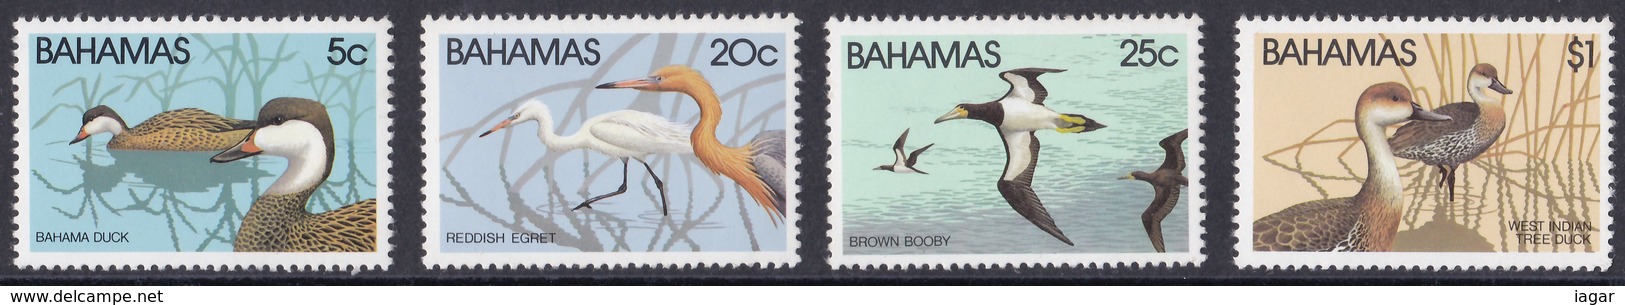 THEMATIC FAUNA:   SEA BIRDS. BAHAMA DUCK,  REDDISH EGRET,  BROWN BOOBY, WEST INDIAN TREE DUCK   -  BAHAMAS - Albatro & Uccelli Marini